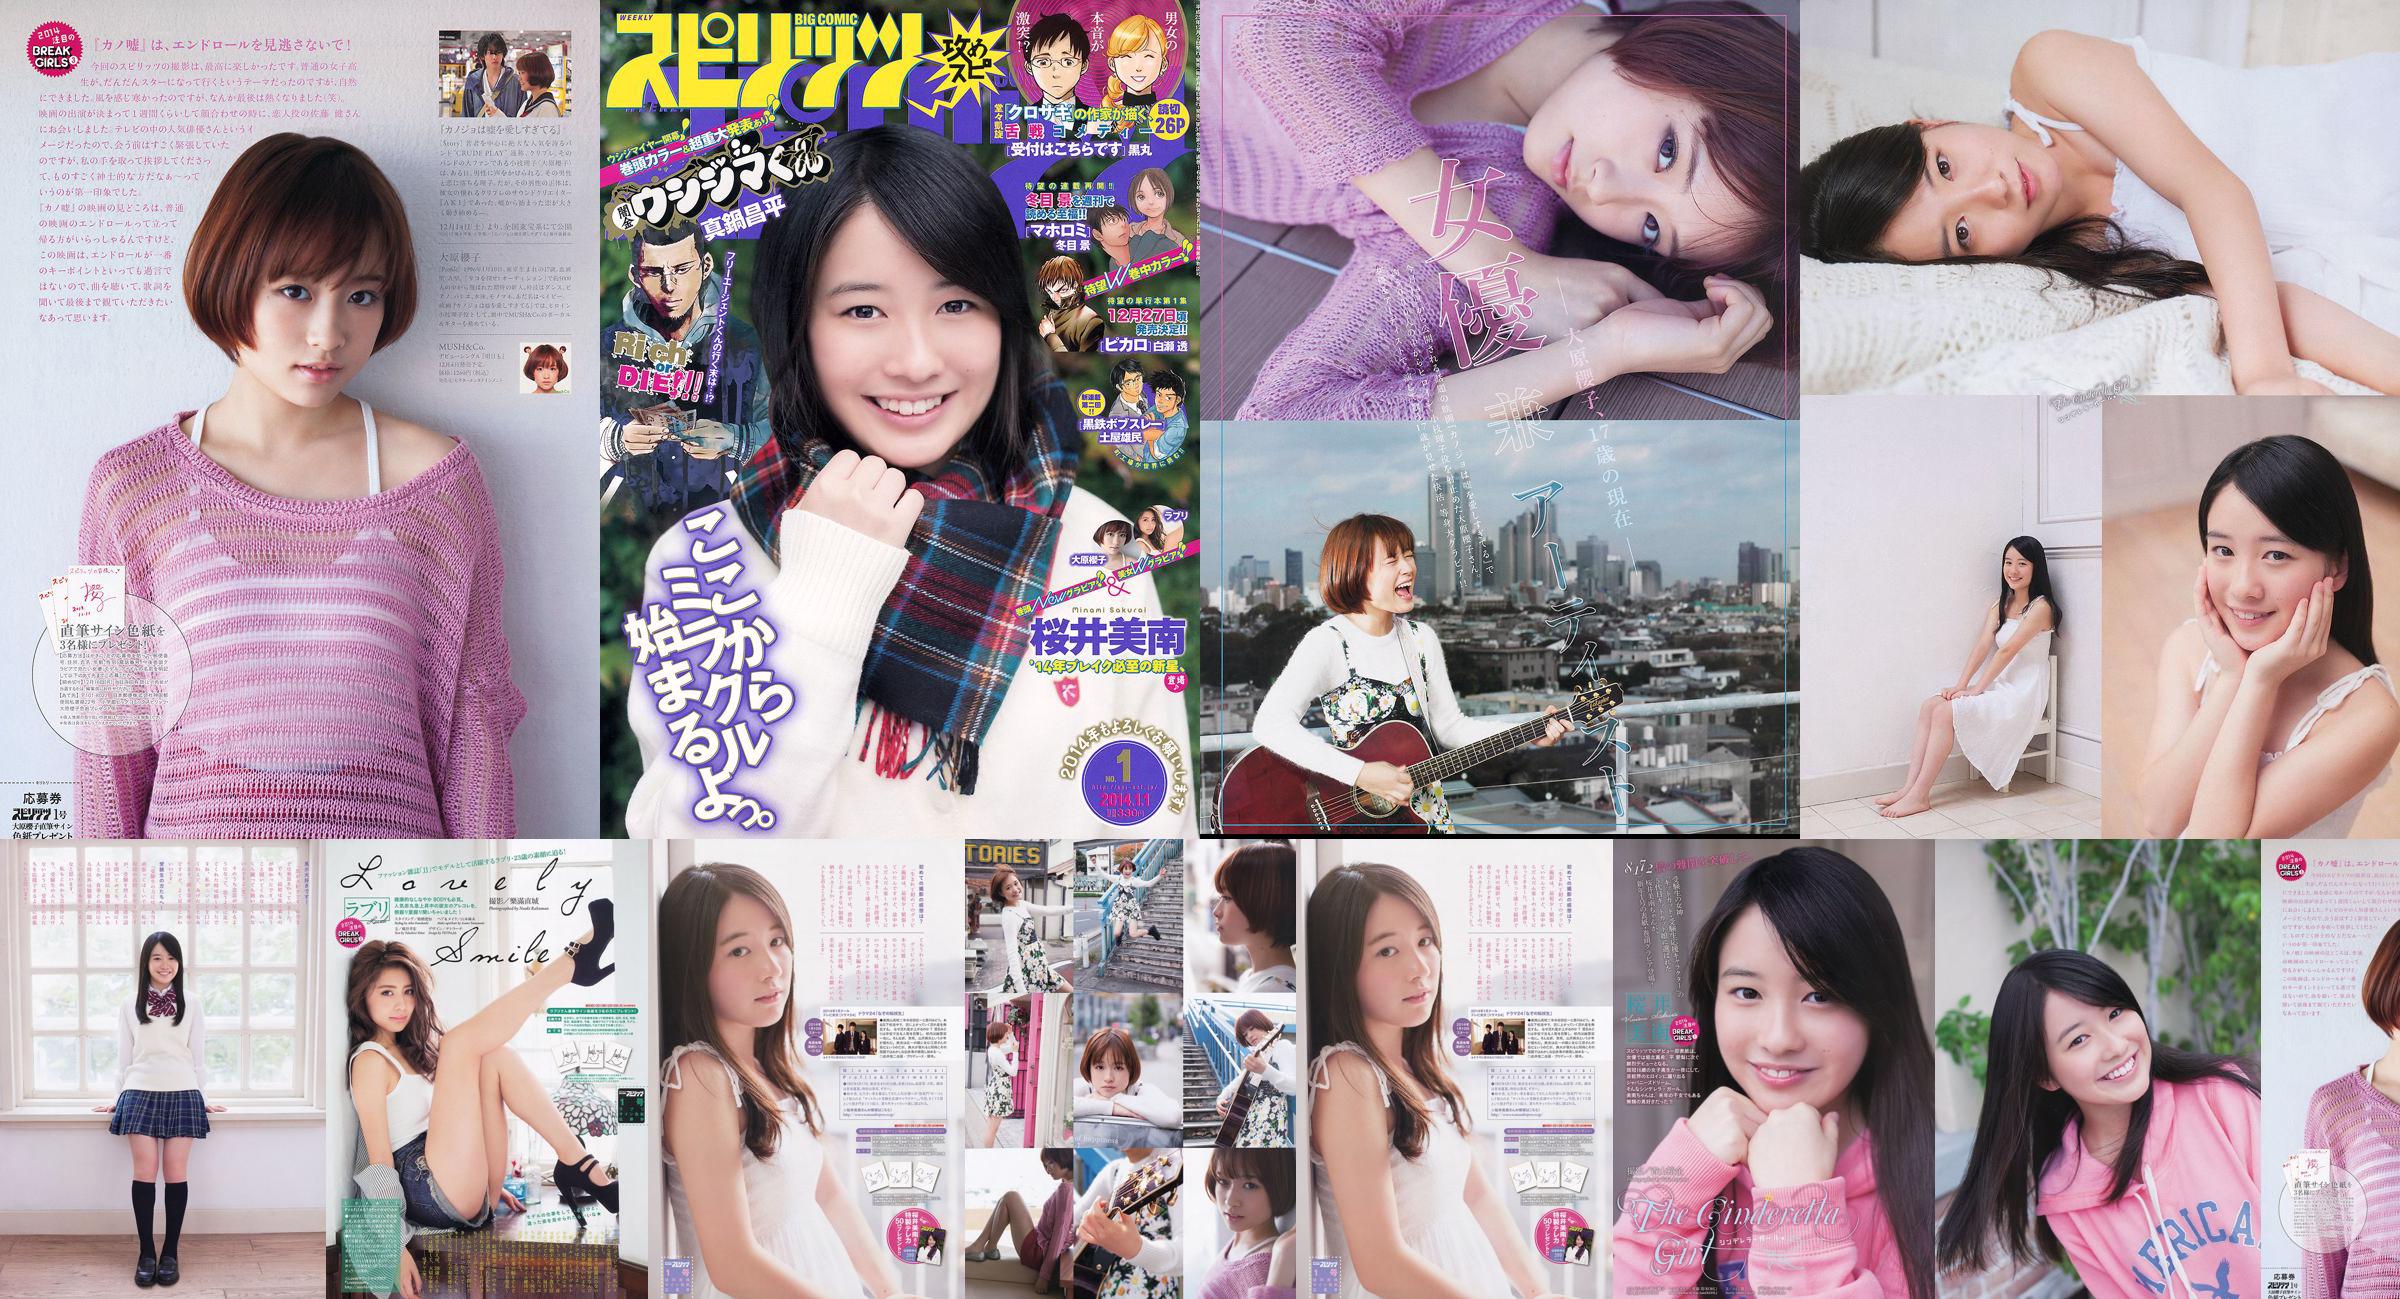 [Grands esprits de la bande dessinée hebdomadaire] Sakurai Minan Ohara Sakurako 2014 Magazine photo n ° 01 No.e0ded9 Page 5